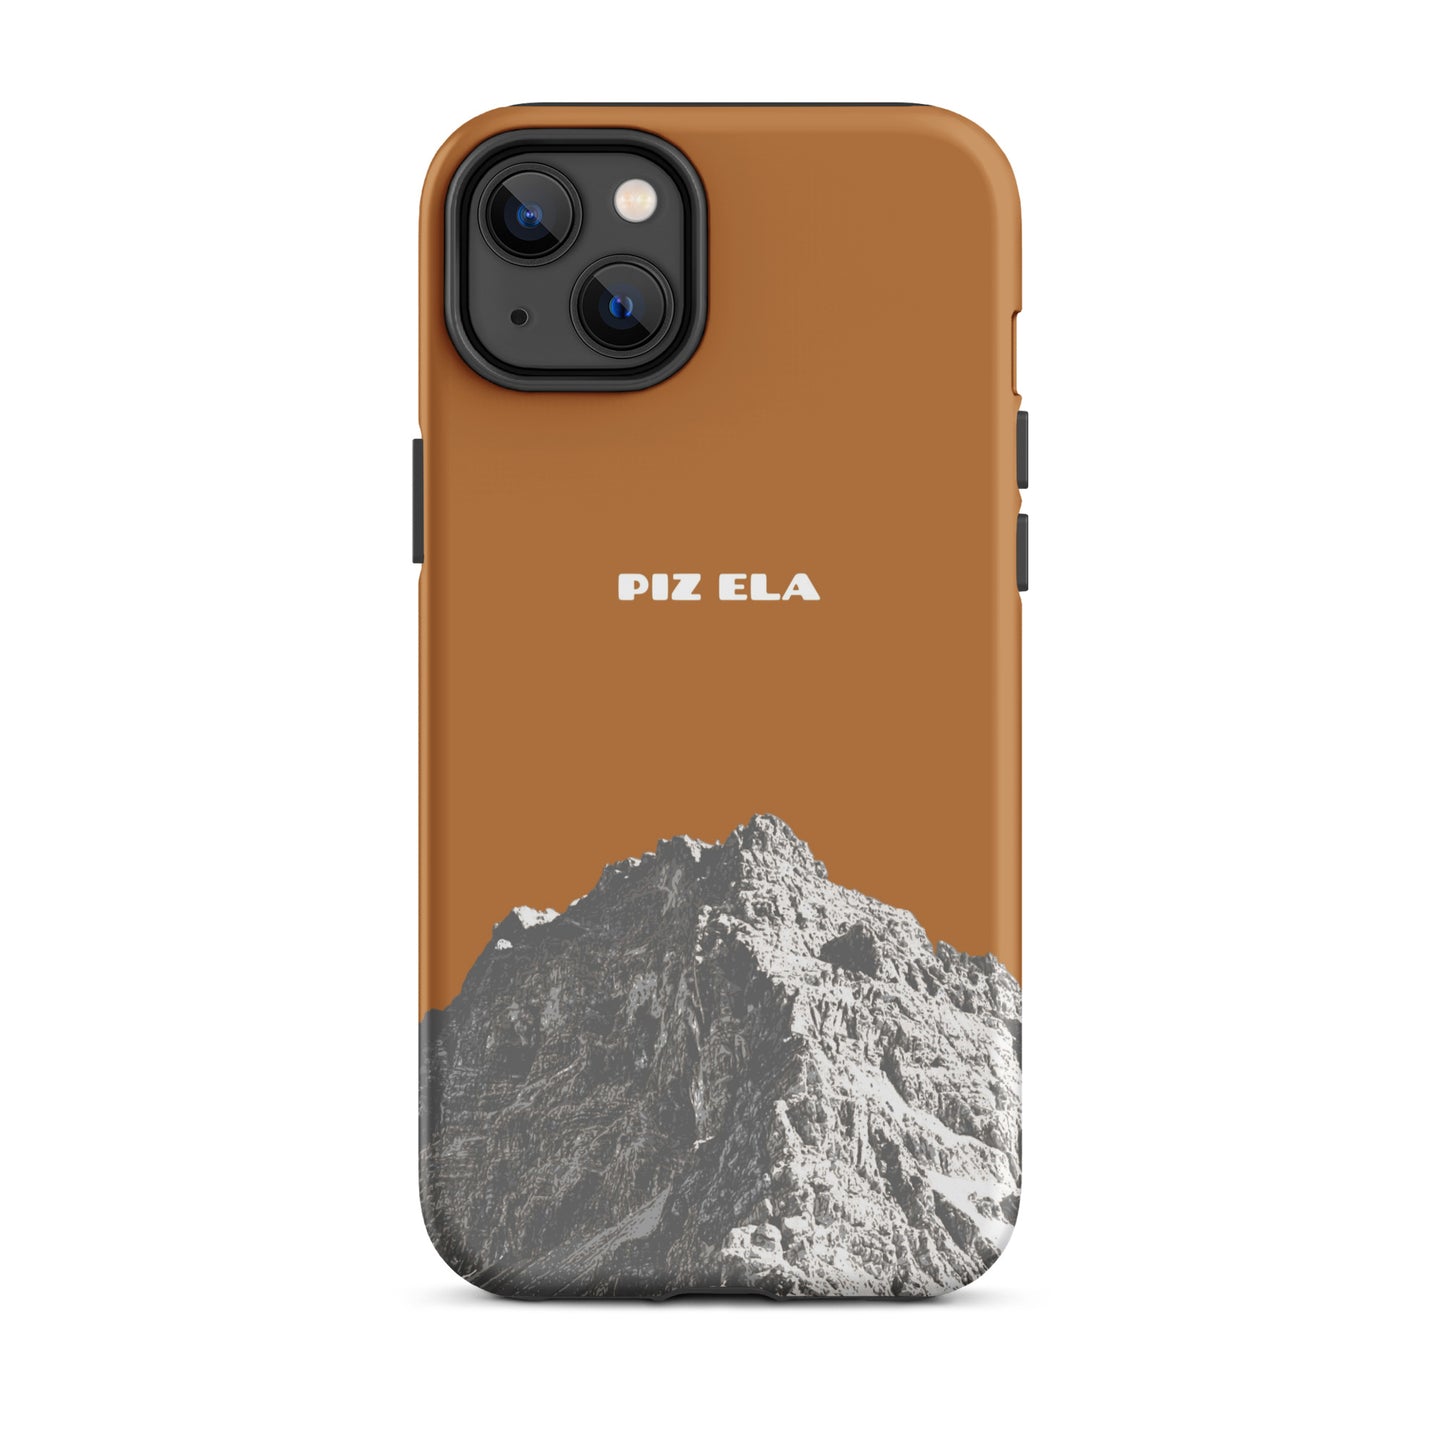 iPhone Case - Piz Ela - Kupfer